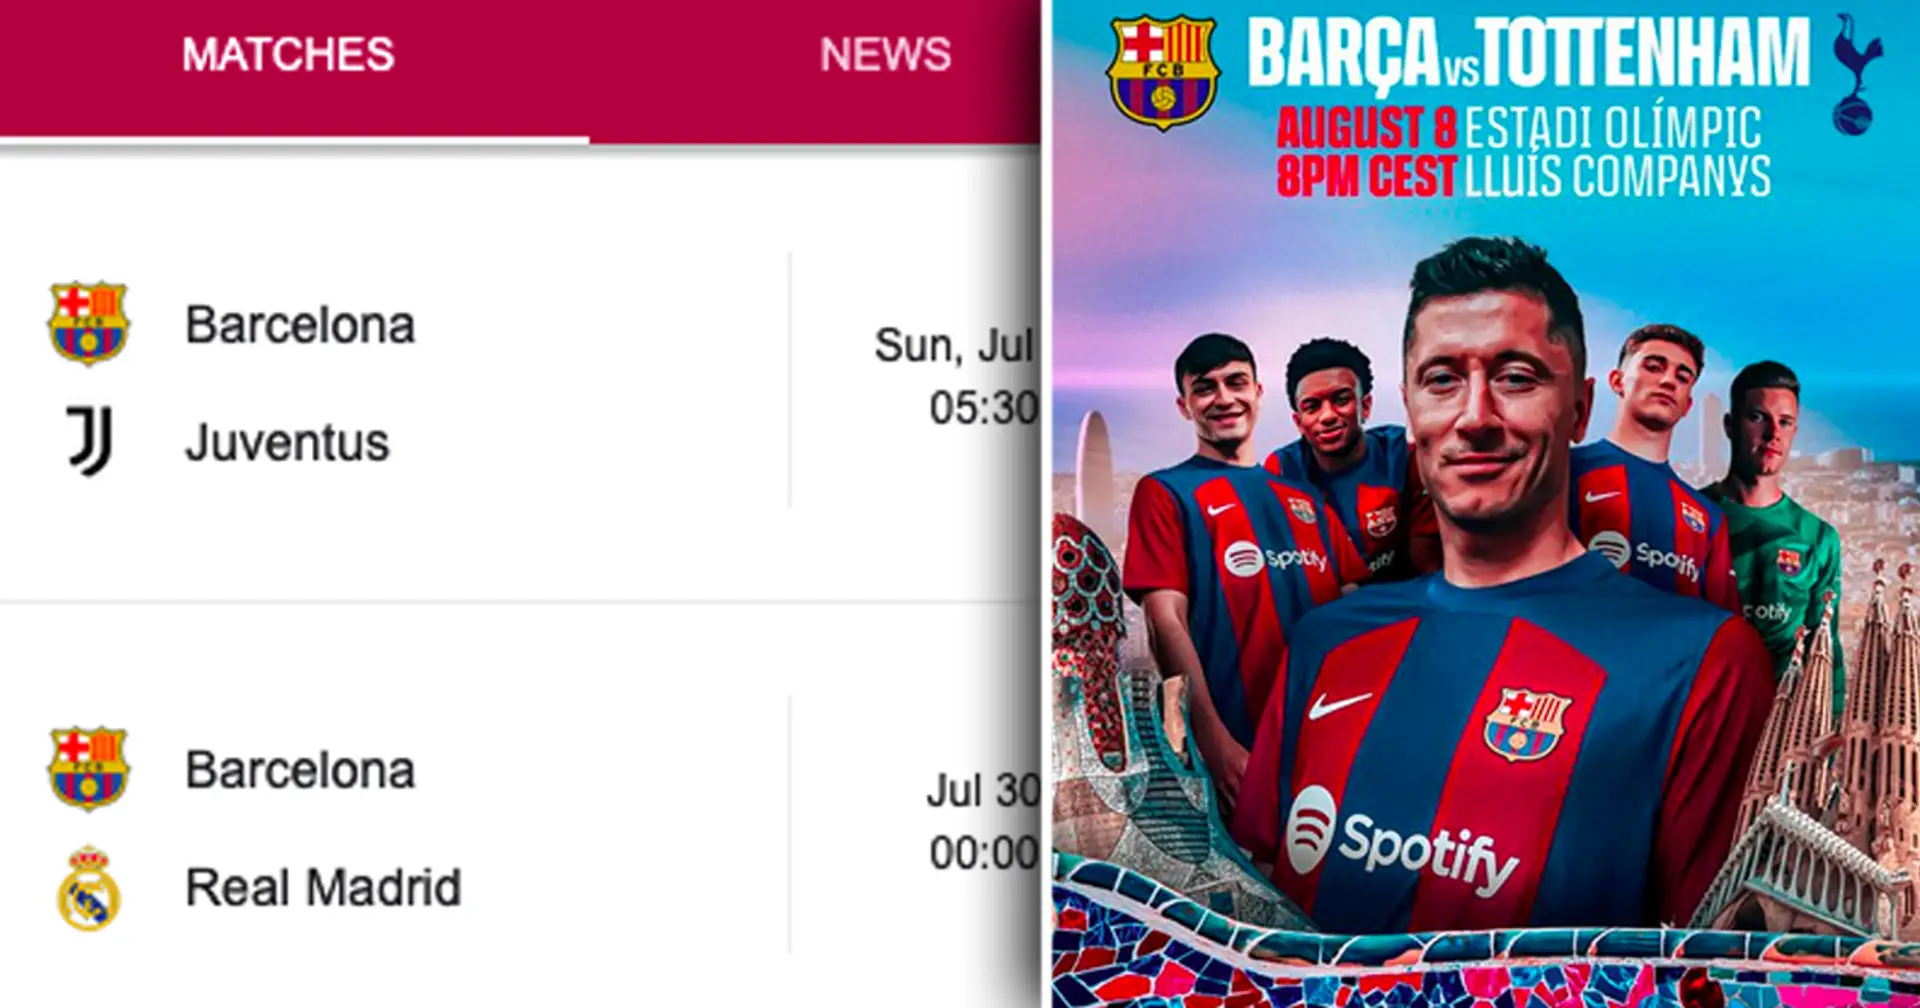 Barca's next 7 games as Joan Gamper Trophy opponent confirmed